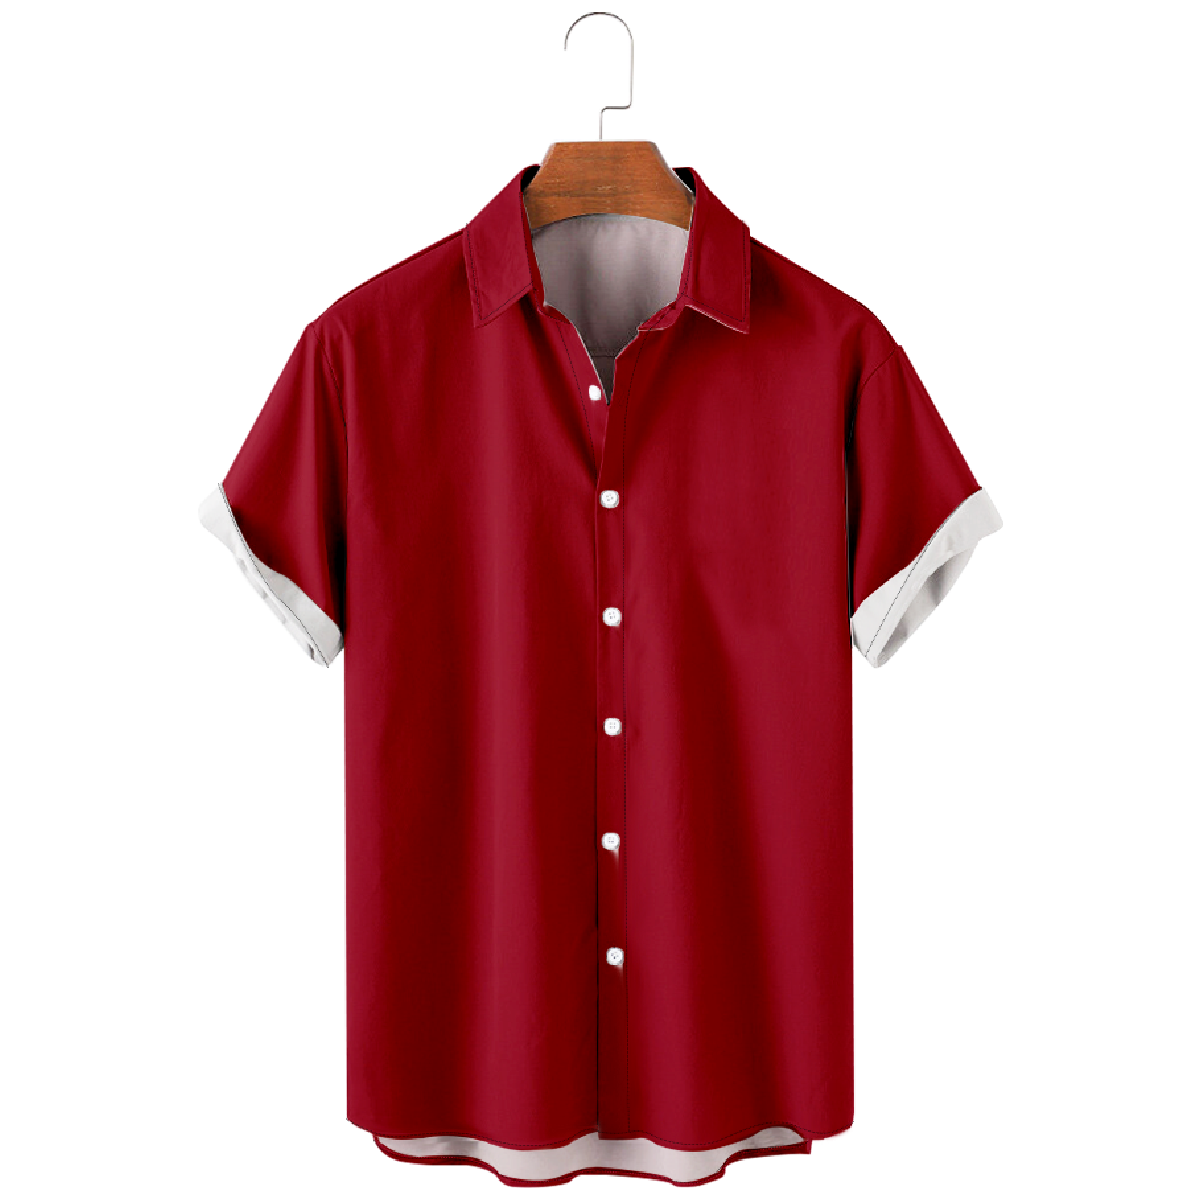 Mens Houston Battle Red Button Up Shirt Short Sleeve Regular Fit Breathable Shirt